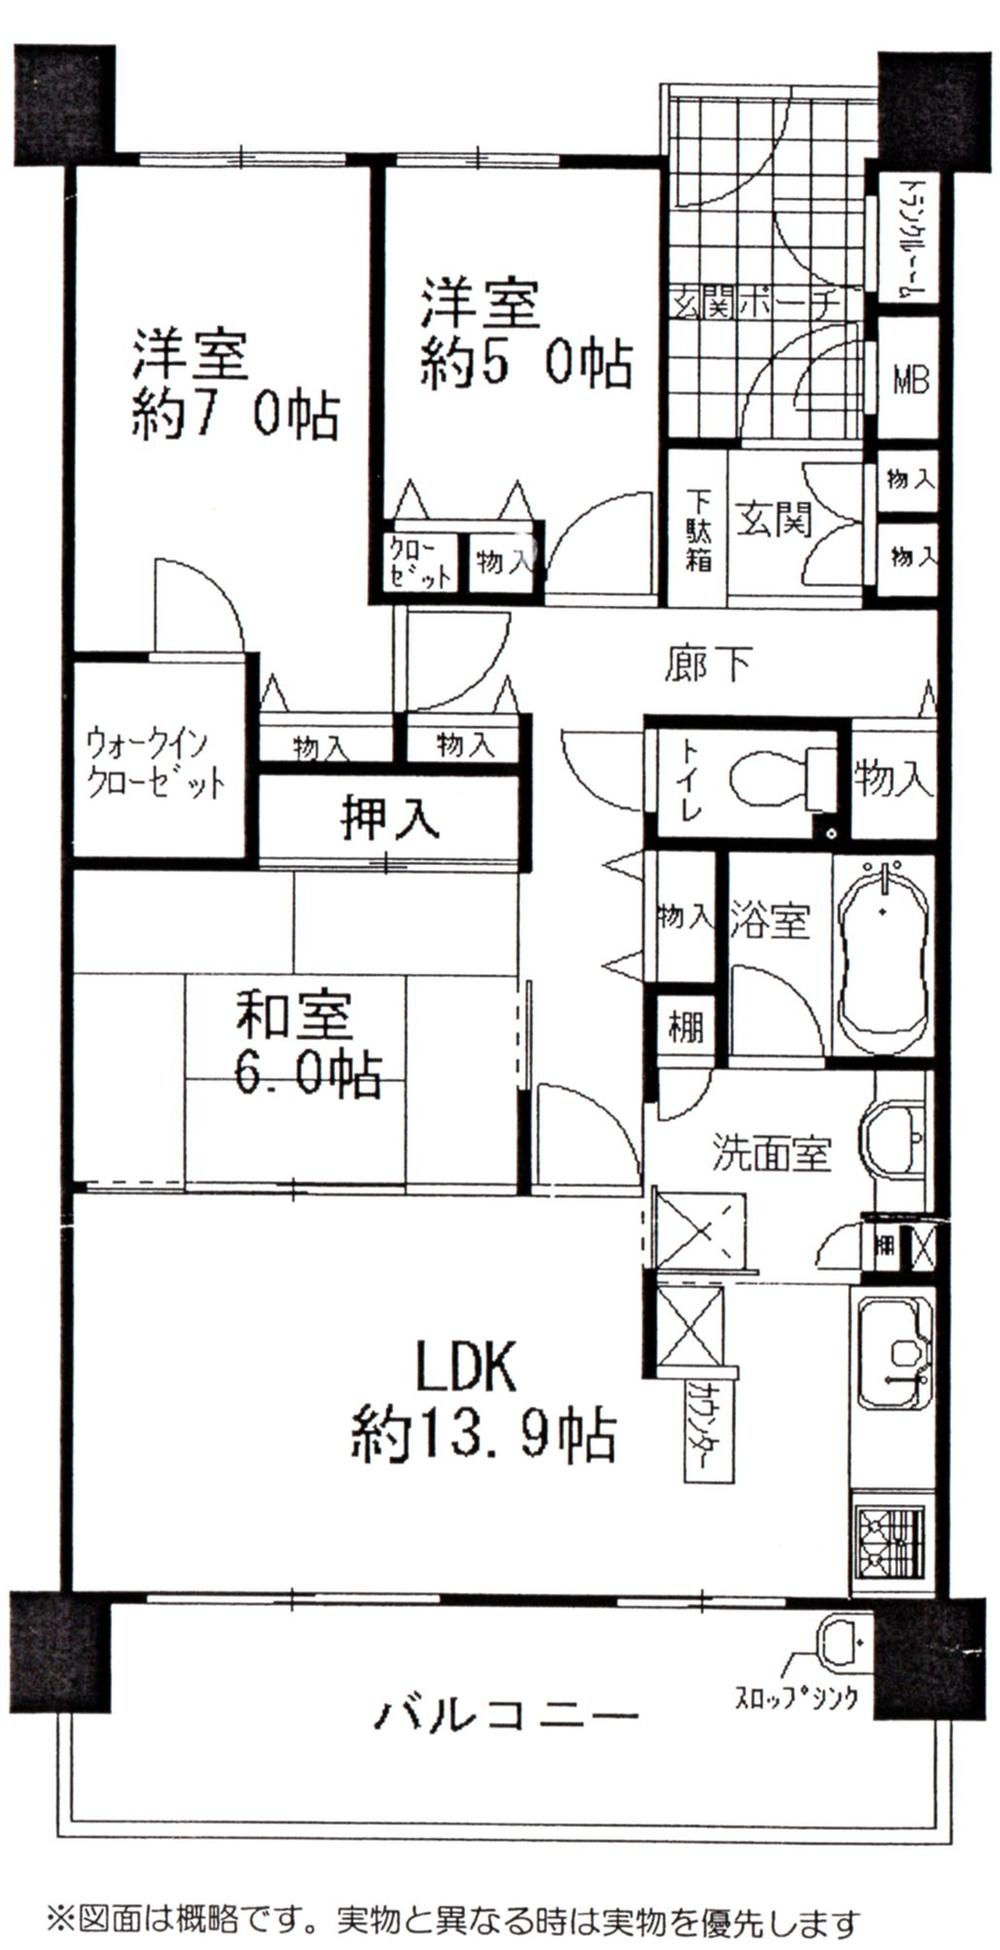 Floor plan. 3LDK, Price 24,800,000 yen, Occupied area 80.55 sq m , Balcony area 13.49 sq m footprint 80.55 sq m , Mato 3LDK (LDK13.9 ・ Hiroshi 7 ・ Hiroshi 5 ・ Sum 6)